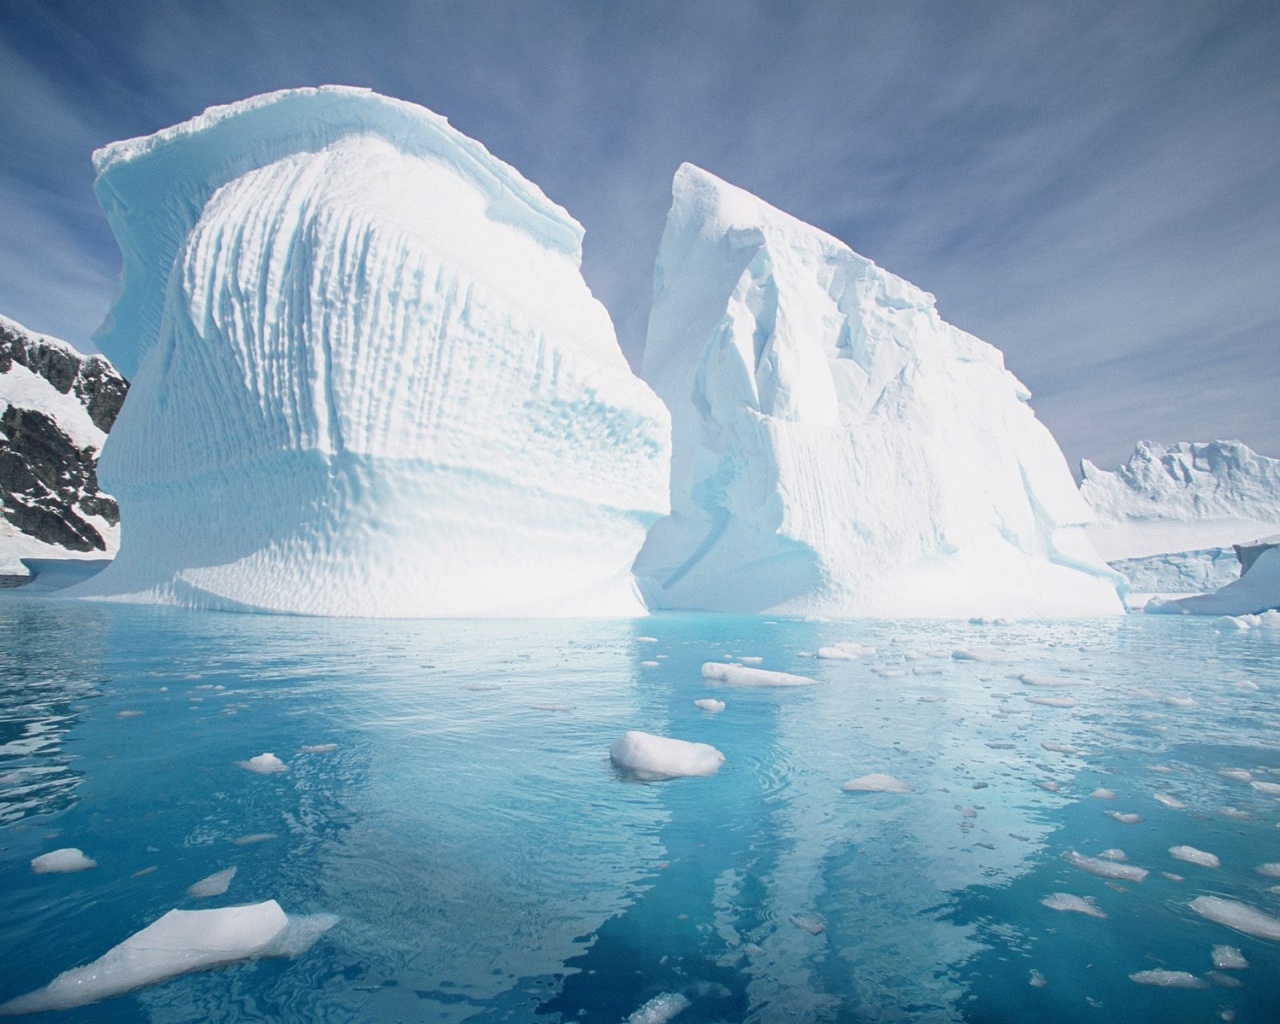 1435447 descargar imagen tierra/naturaleza, iceberg: fondos de pantalla y protectores de pantalla gratis